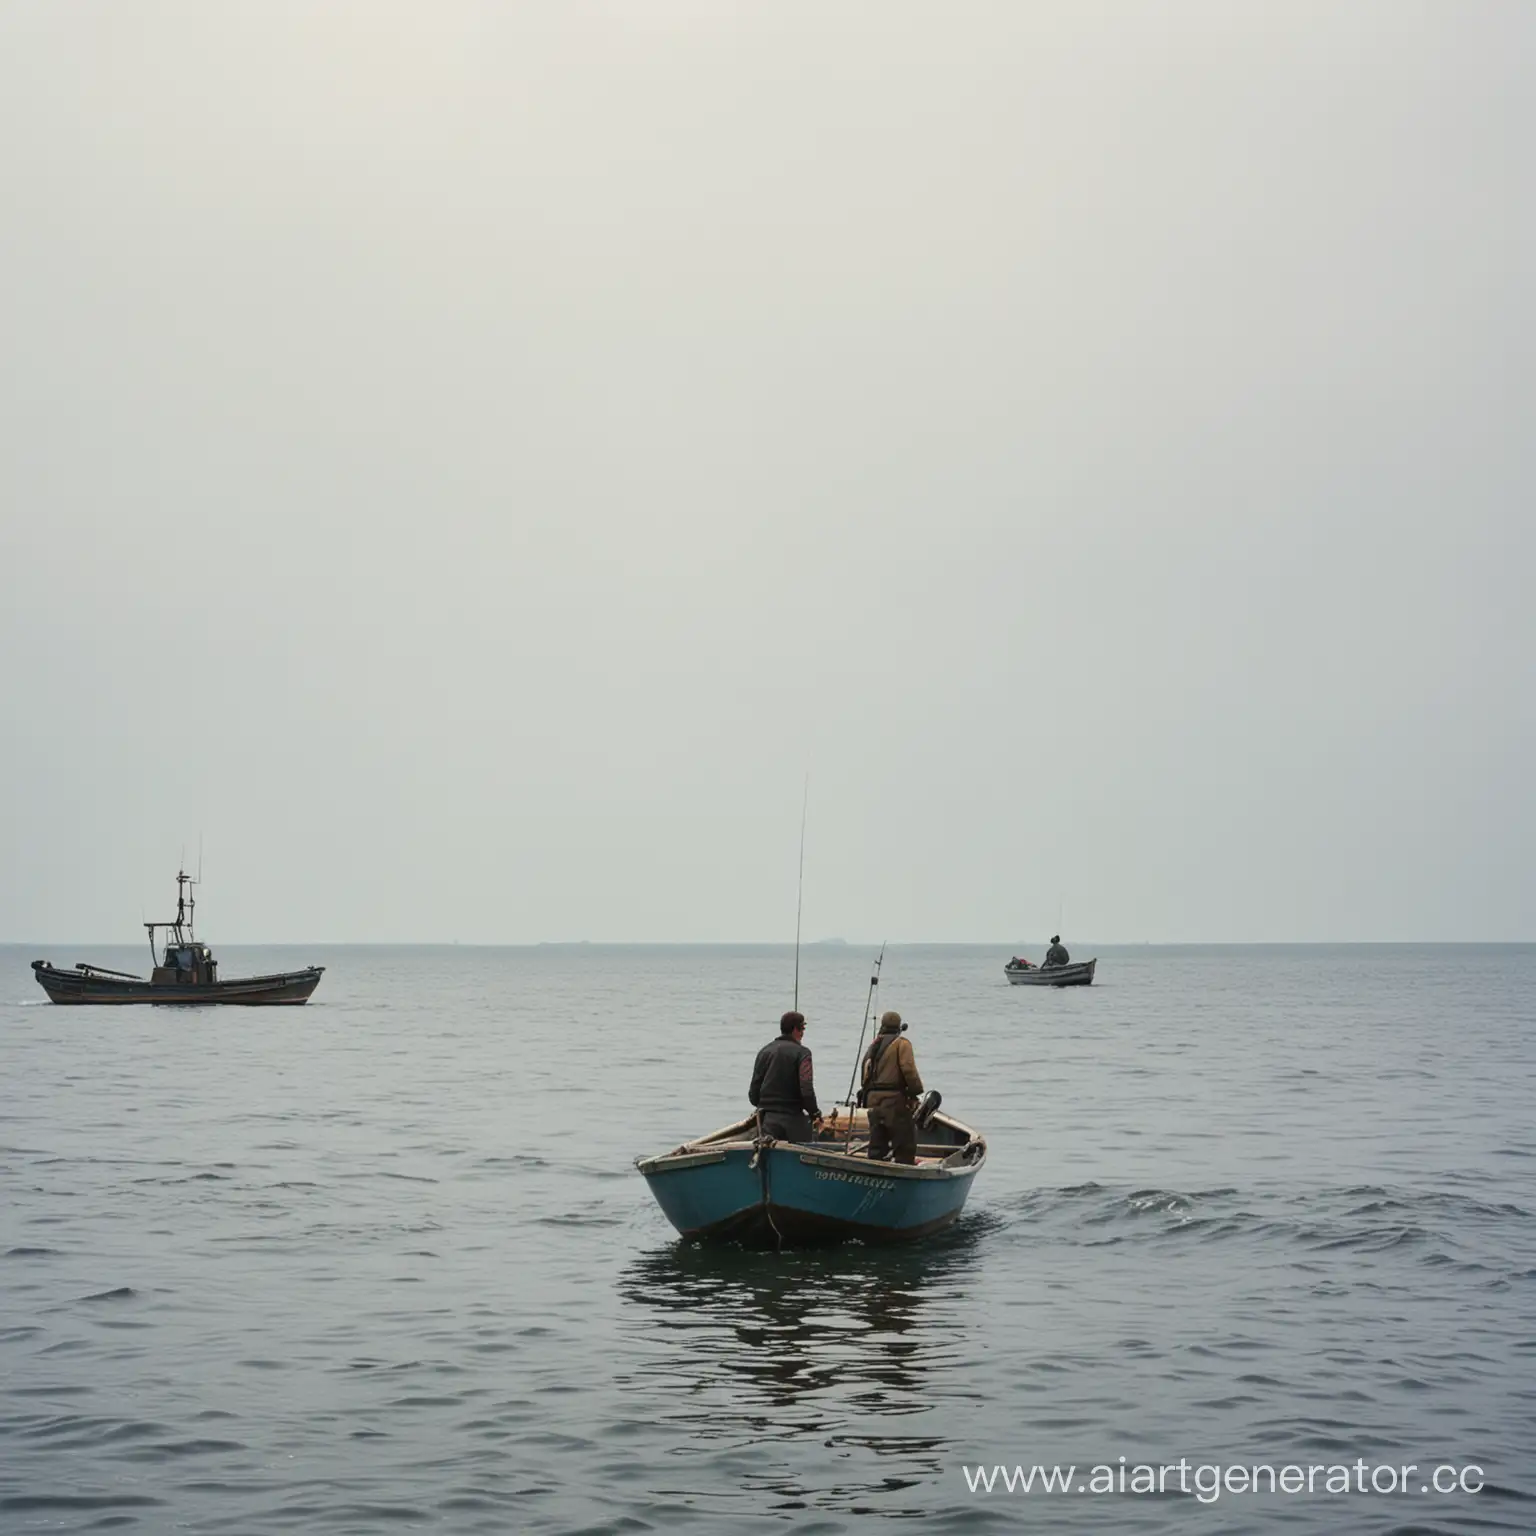 Two-Fishermen-Fishing-from-Boat-Serene-1970s-Scene